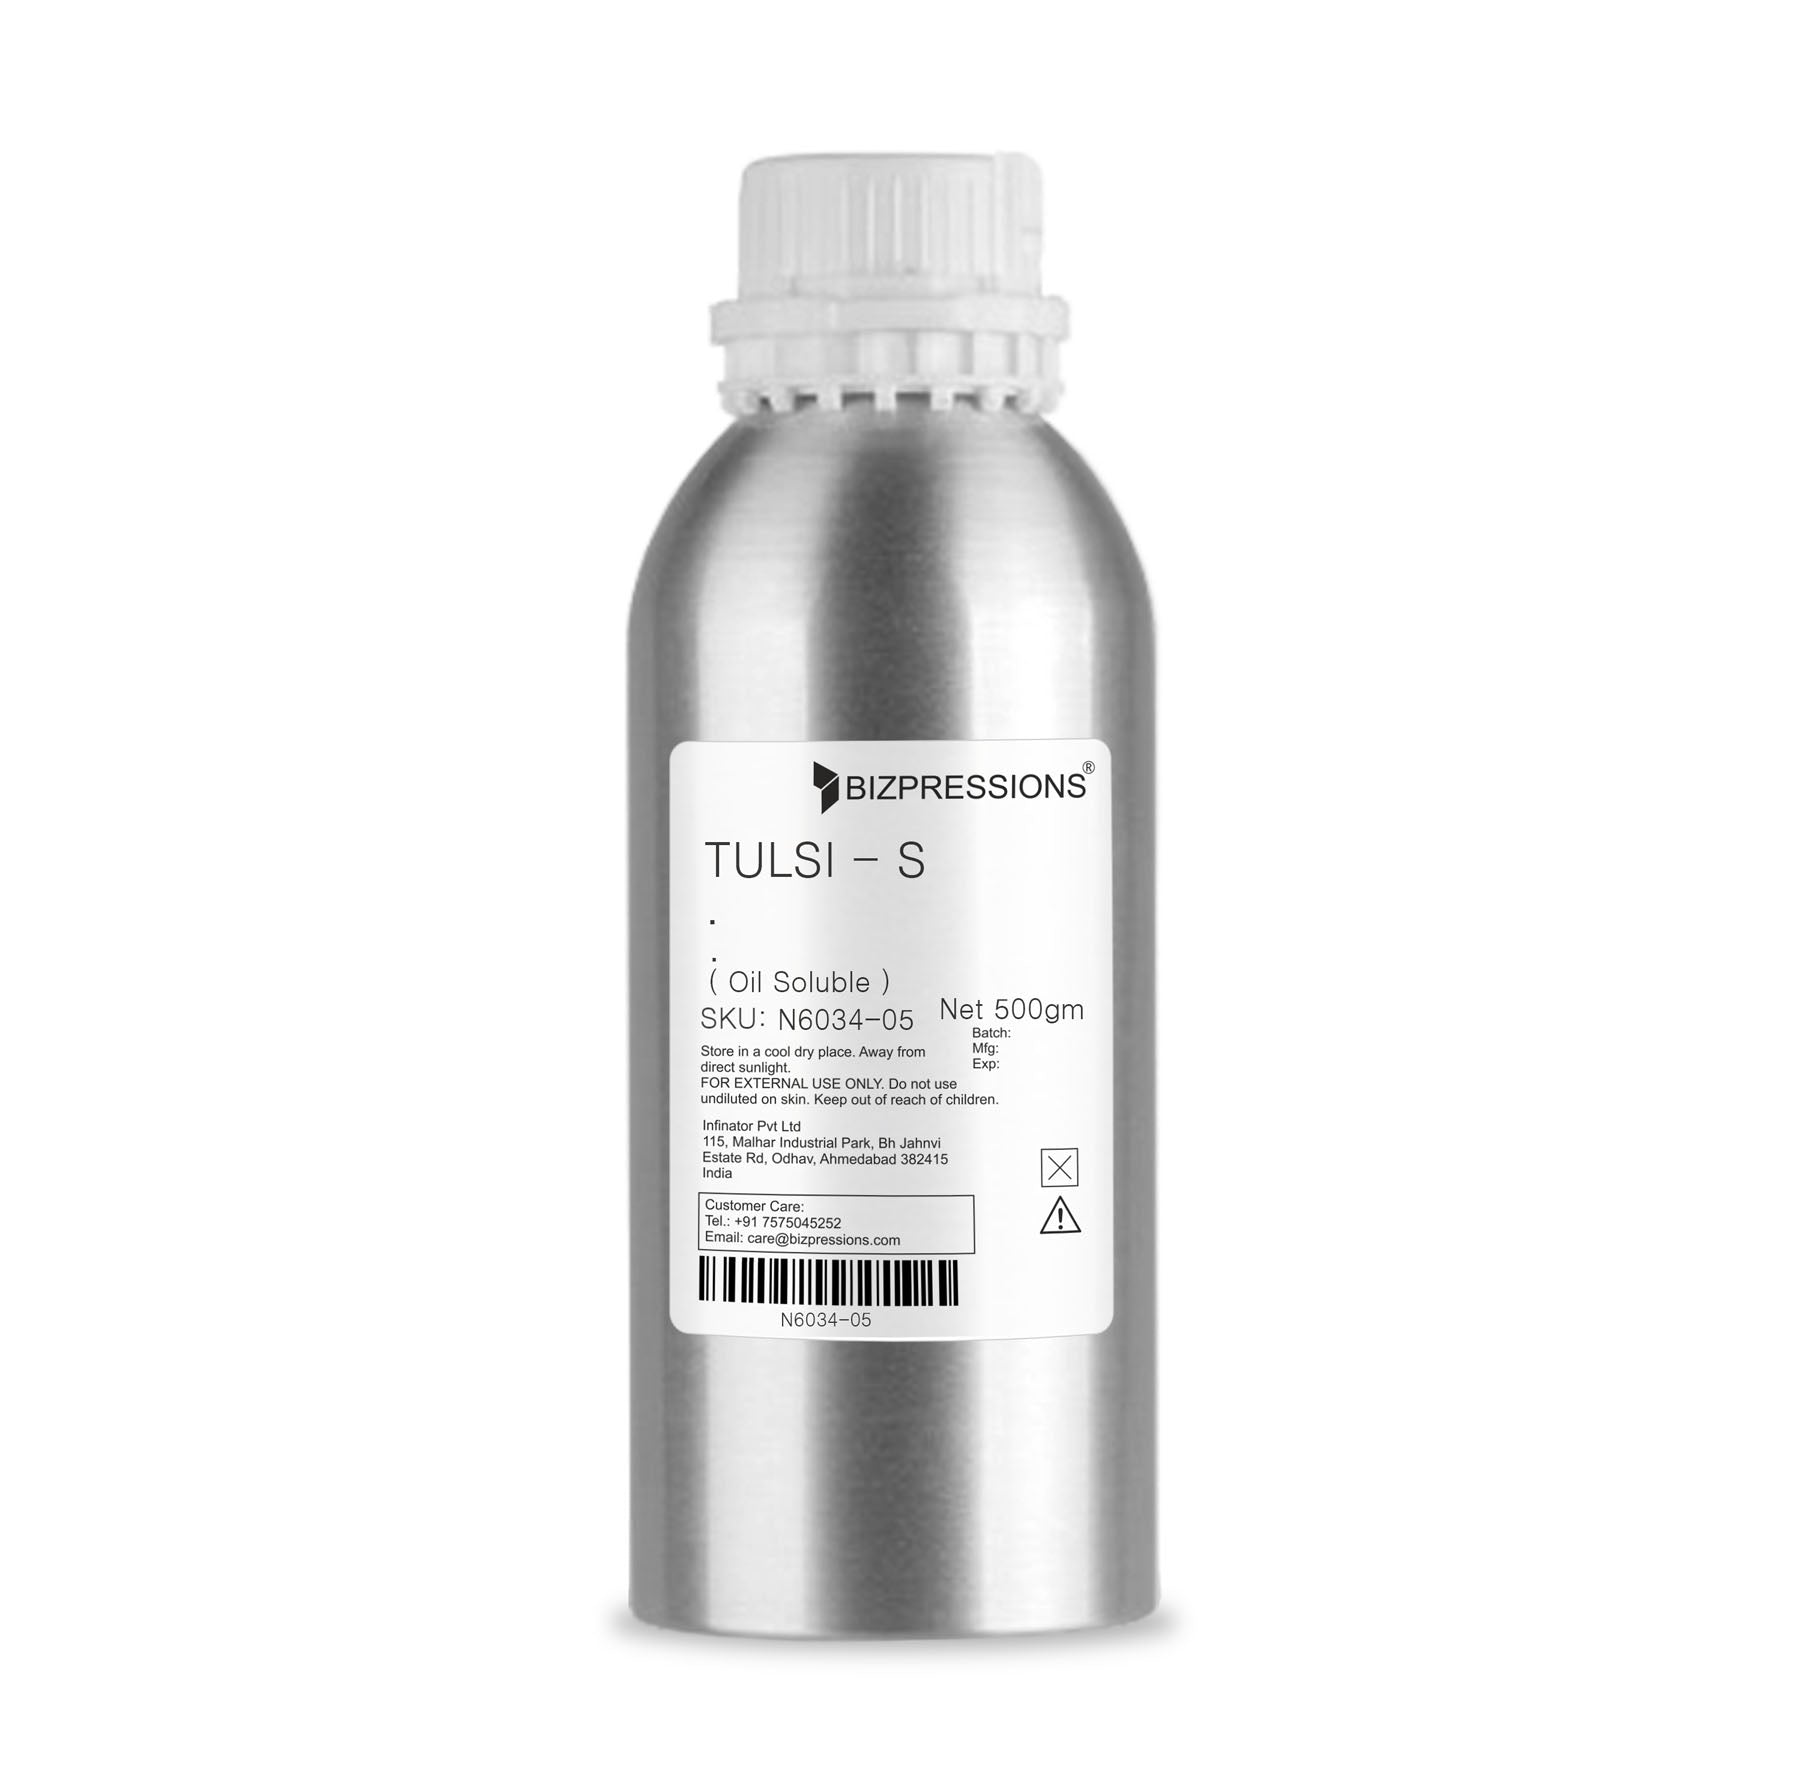 TULSI - S - Fragrance ( Oil Soluble ) - 500 gm